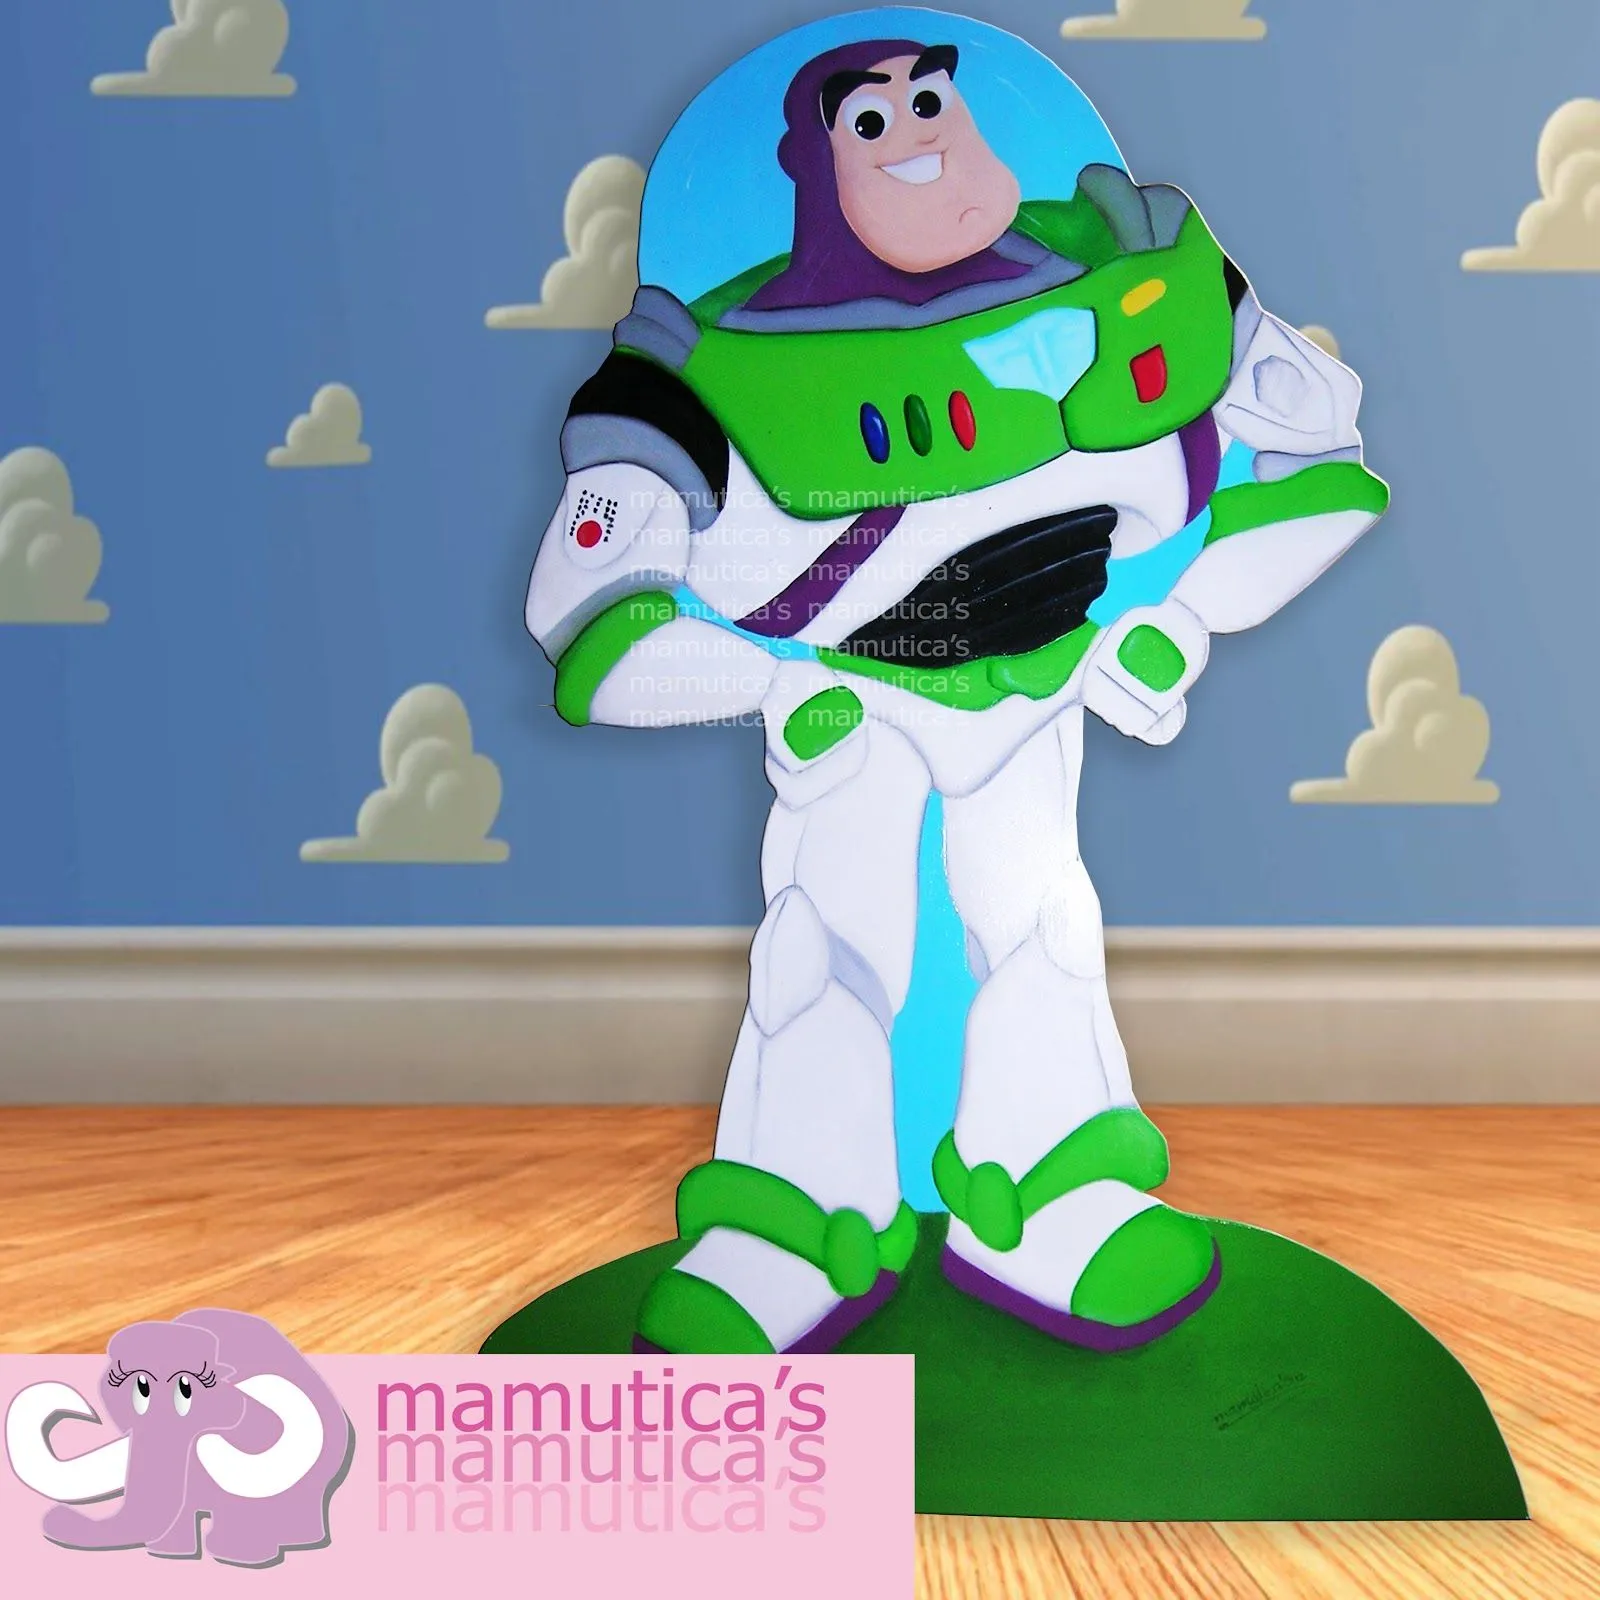 Mamutica's: Toy Story